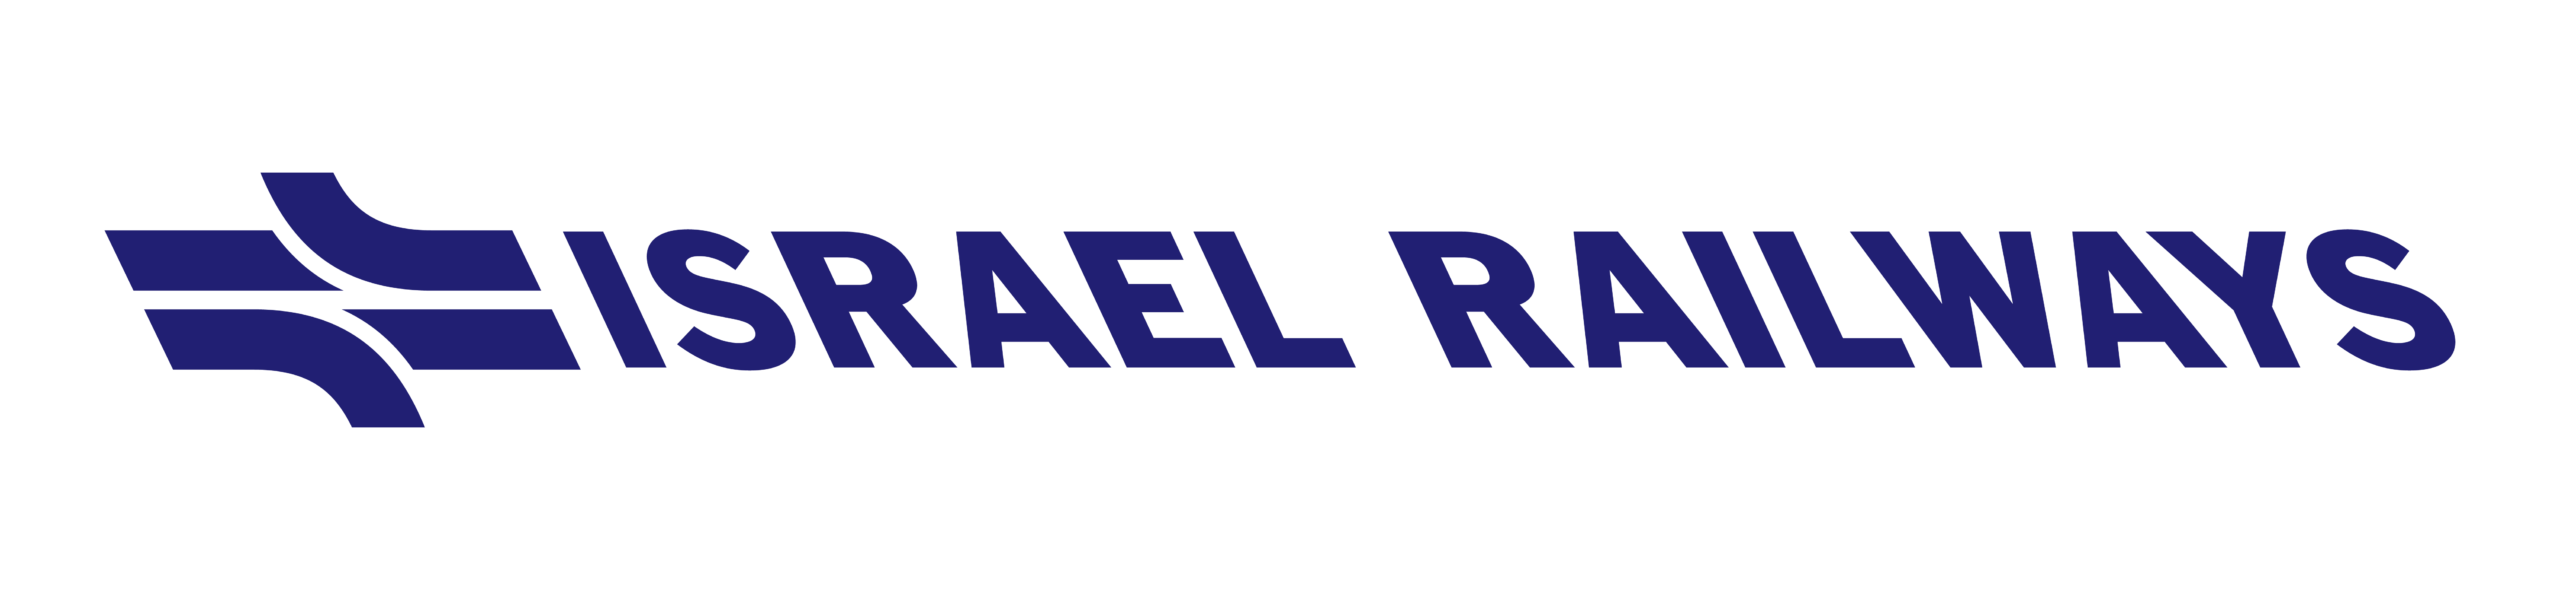 Logotype of Israel Railways